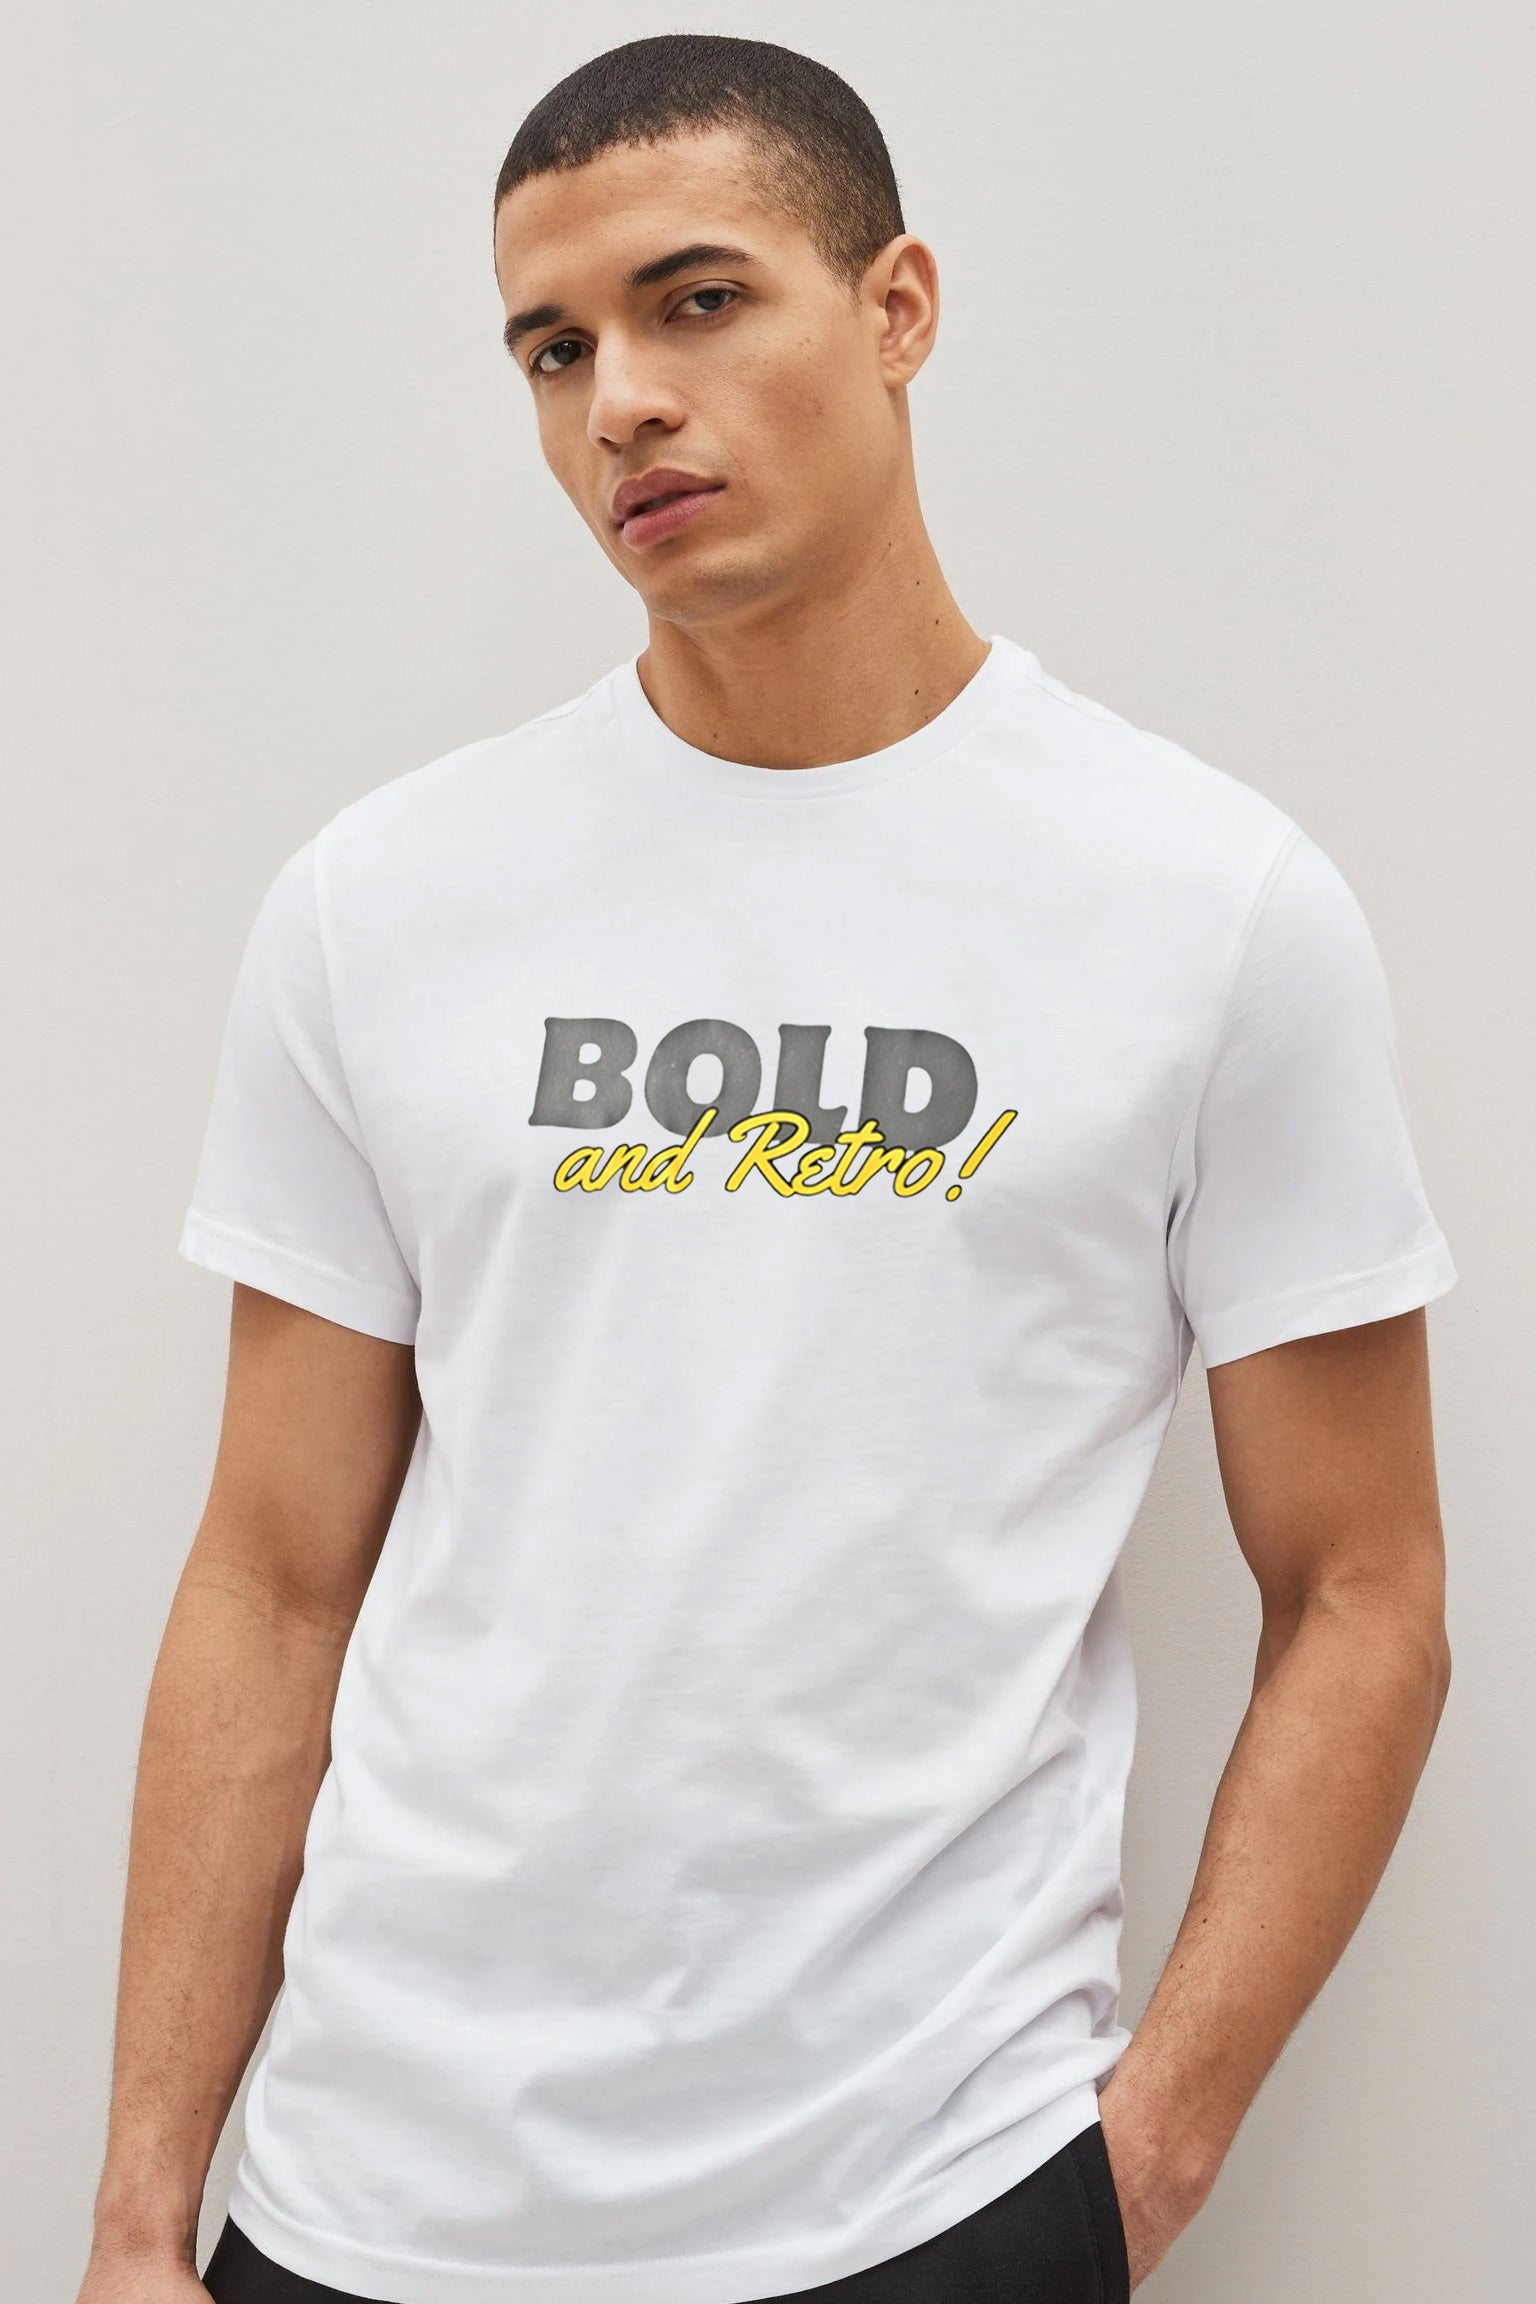 Men's Bold And Retro Printed Crew Neck Tee Shirt